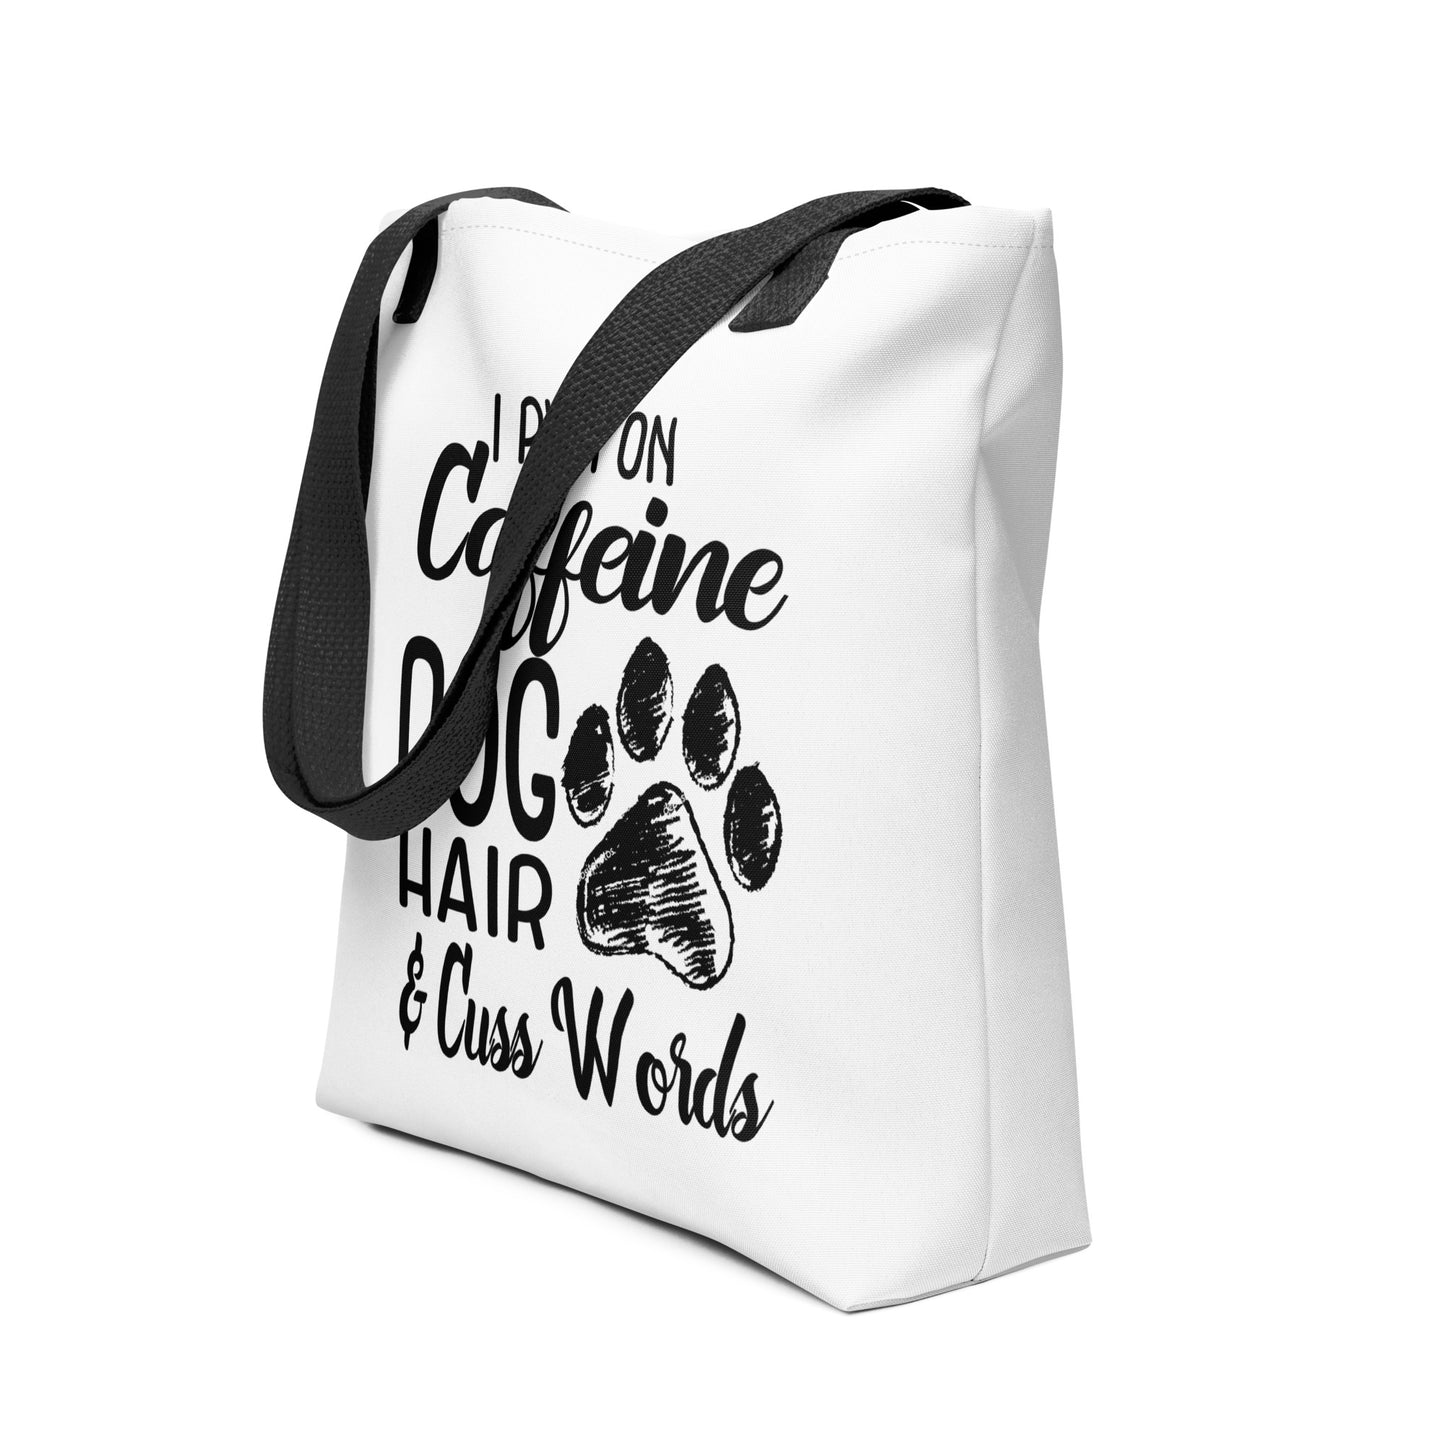 I Run on Caffeine Dog Hair & Cuss Words Tote Bag